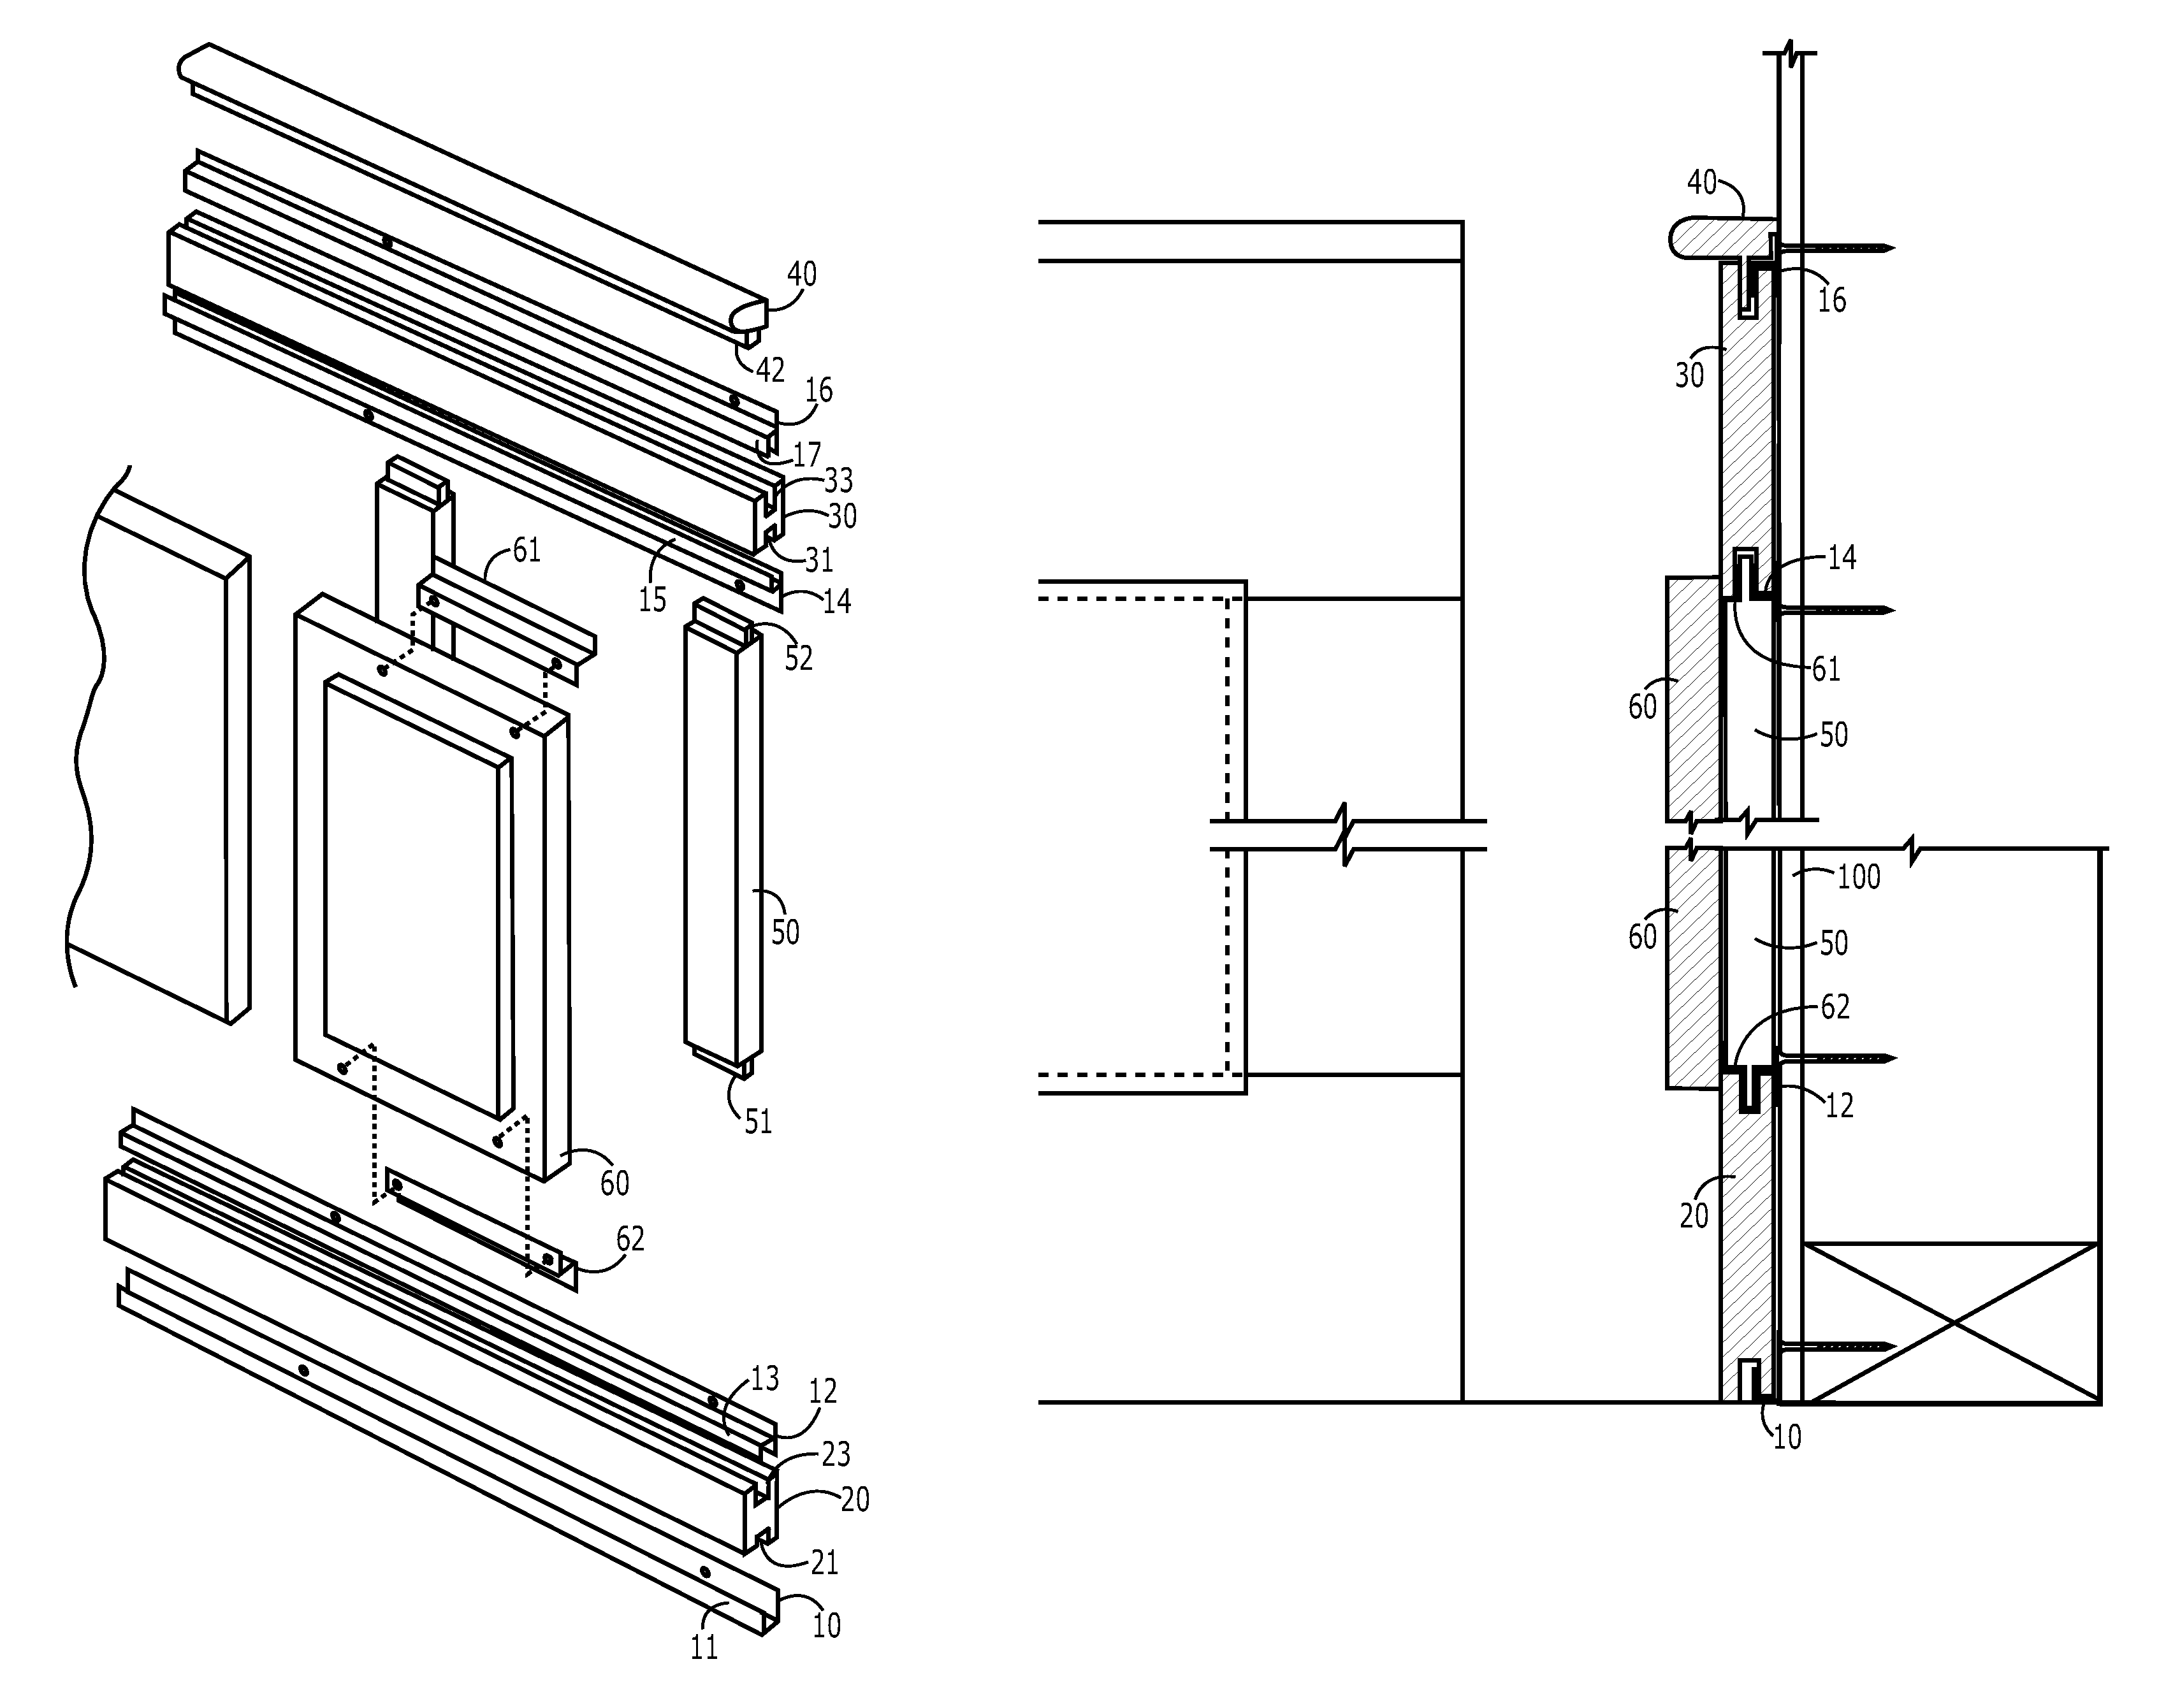 Modular wall panel system